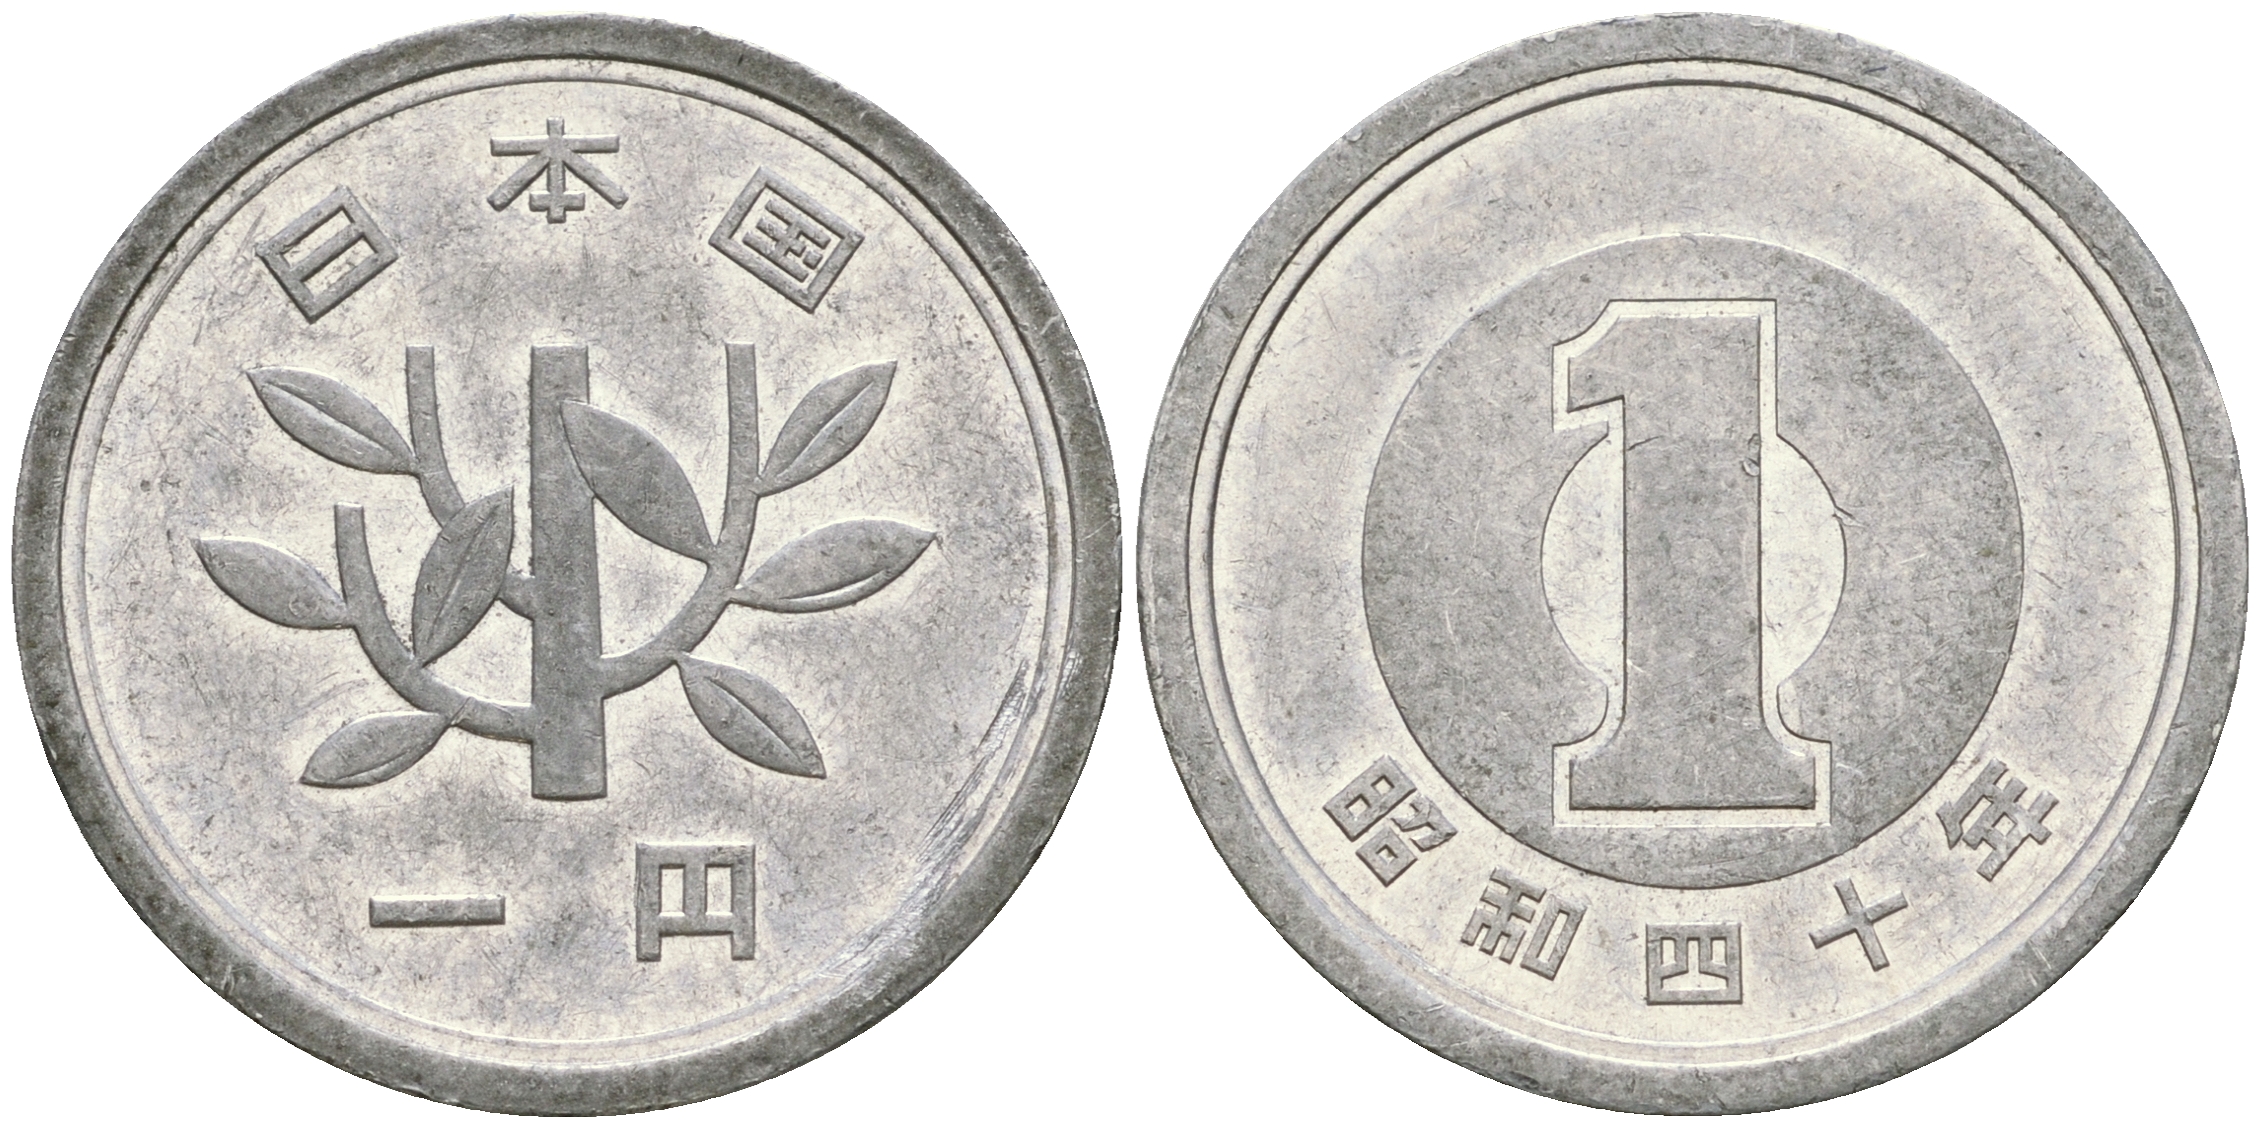 First coins. Монета 1 йена Япония. Монета Япония 1 йена 1989. 1 Йена 1955-1989 Япония. Монета Япония 1 йена 1994.